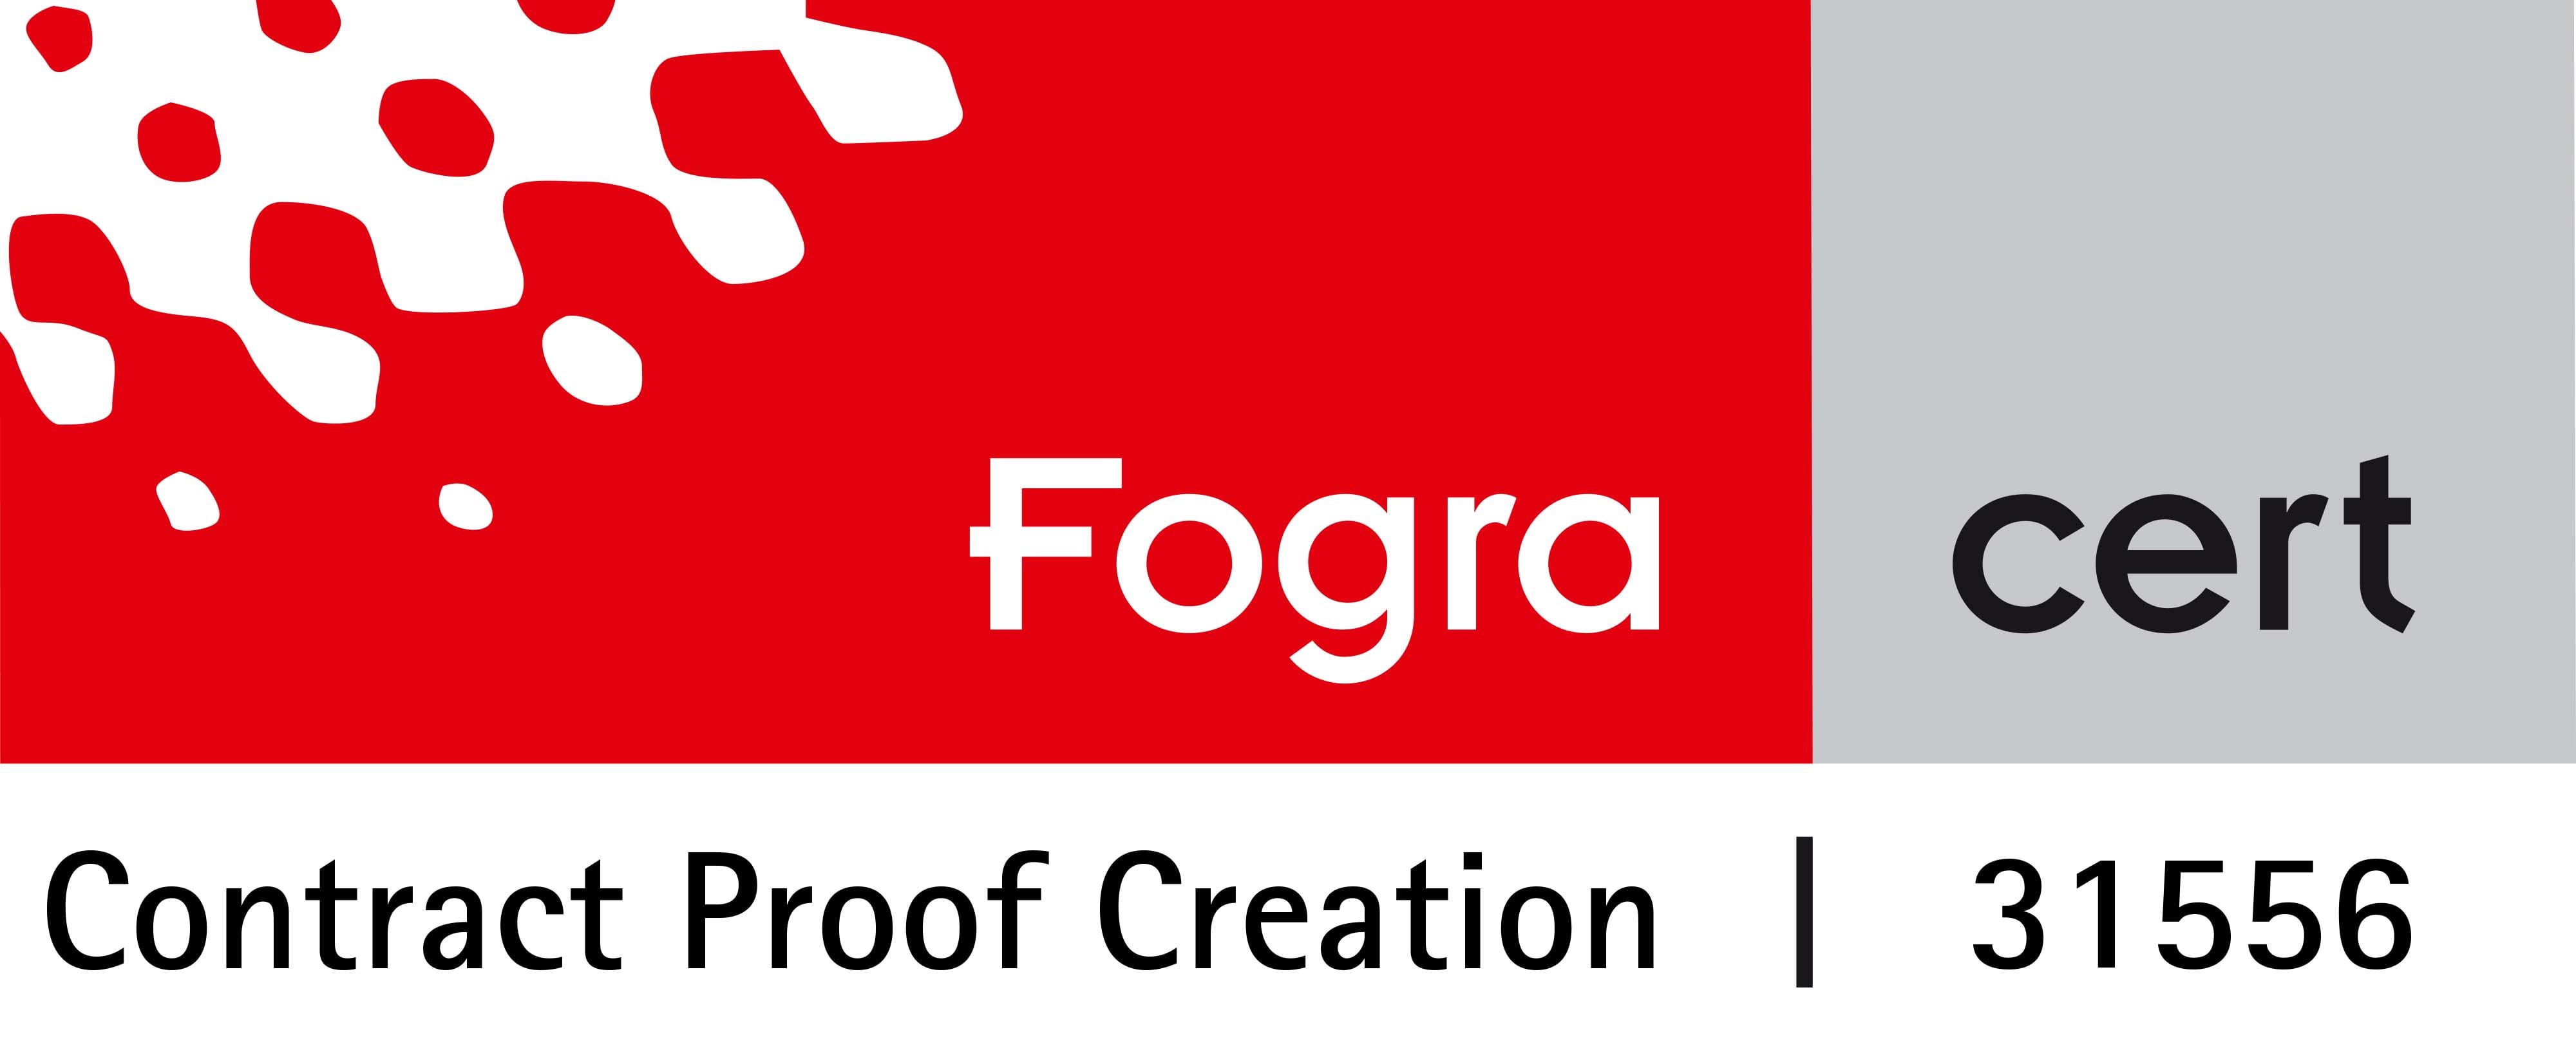 Proof GmbH Fogra Cert Logo 2017 合同证明制作